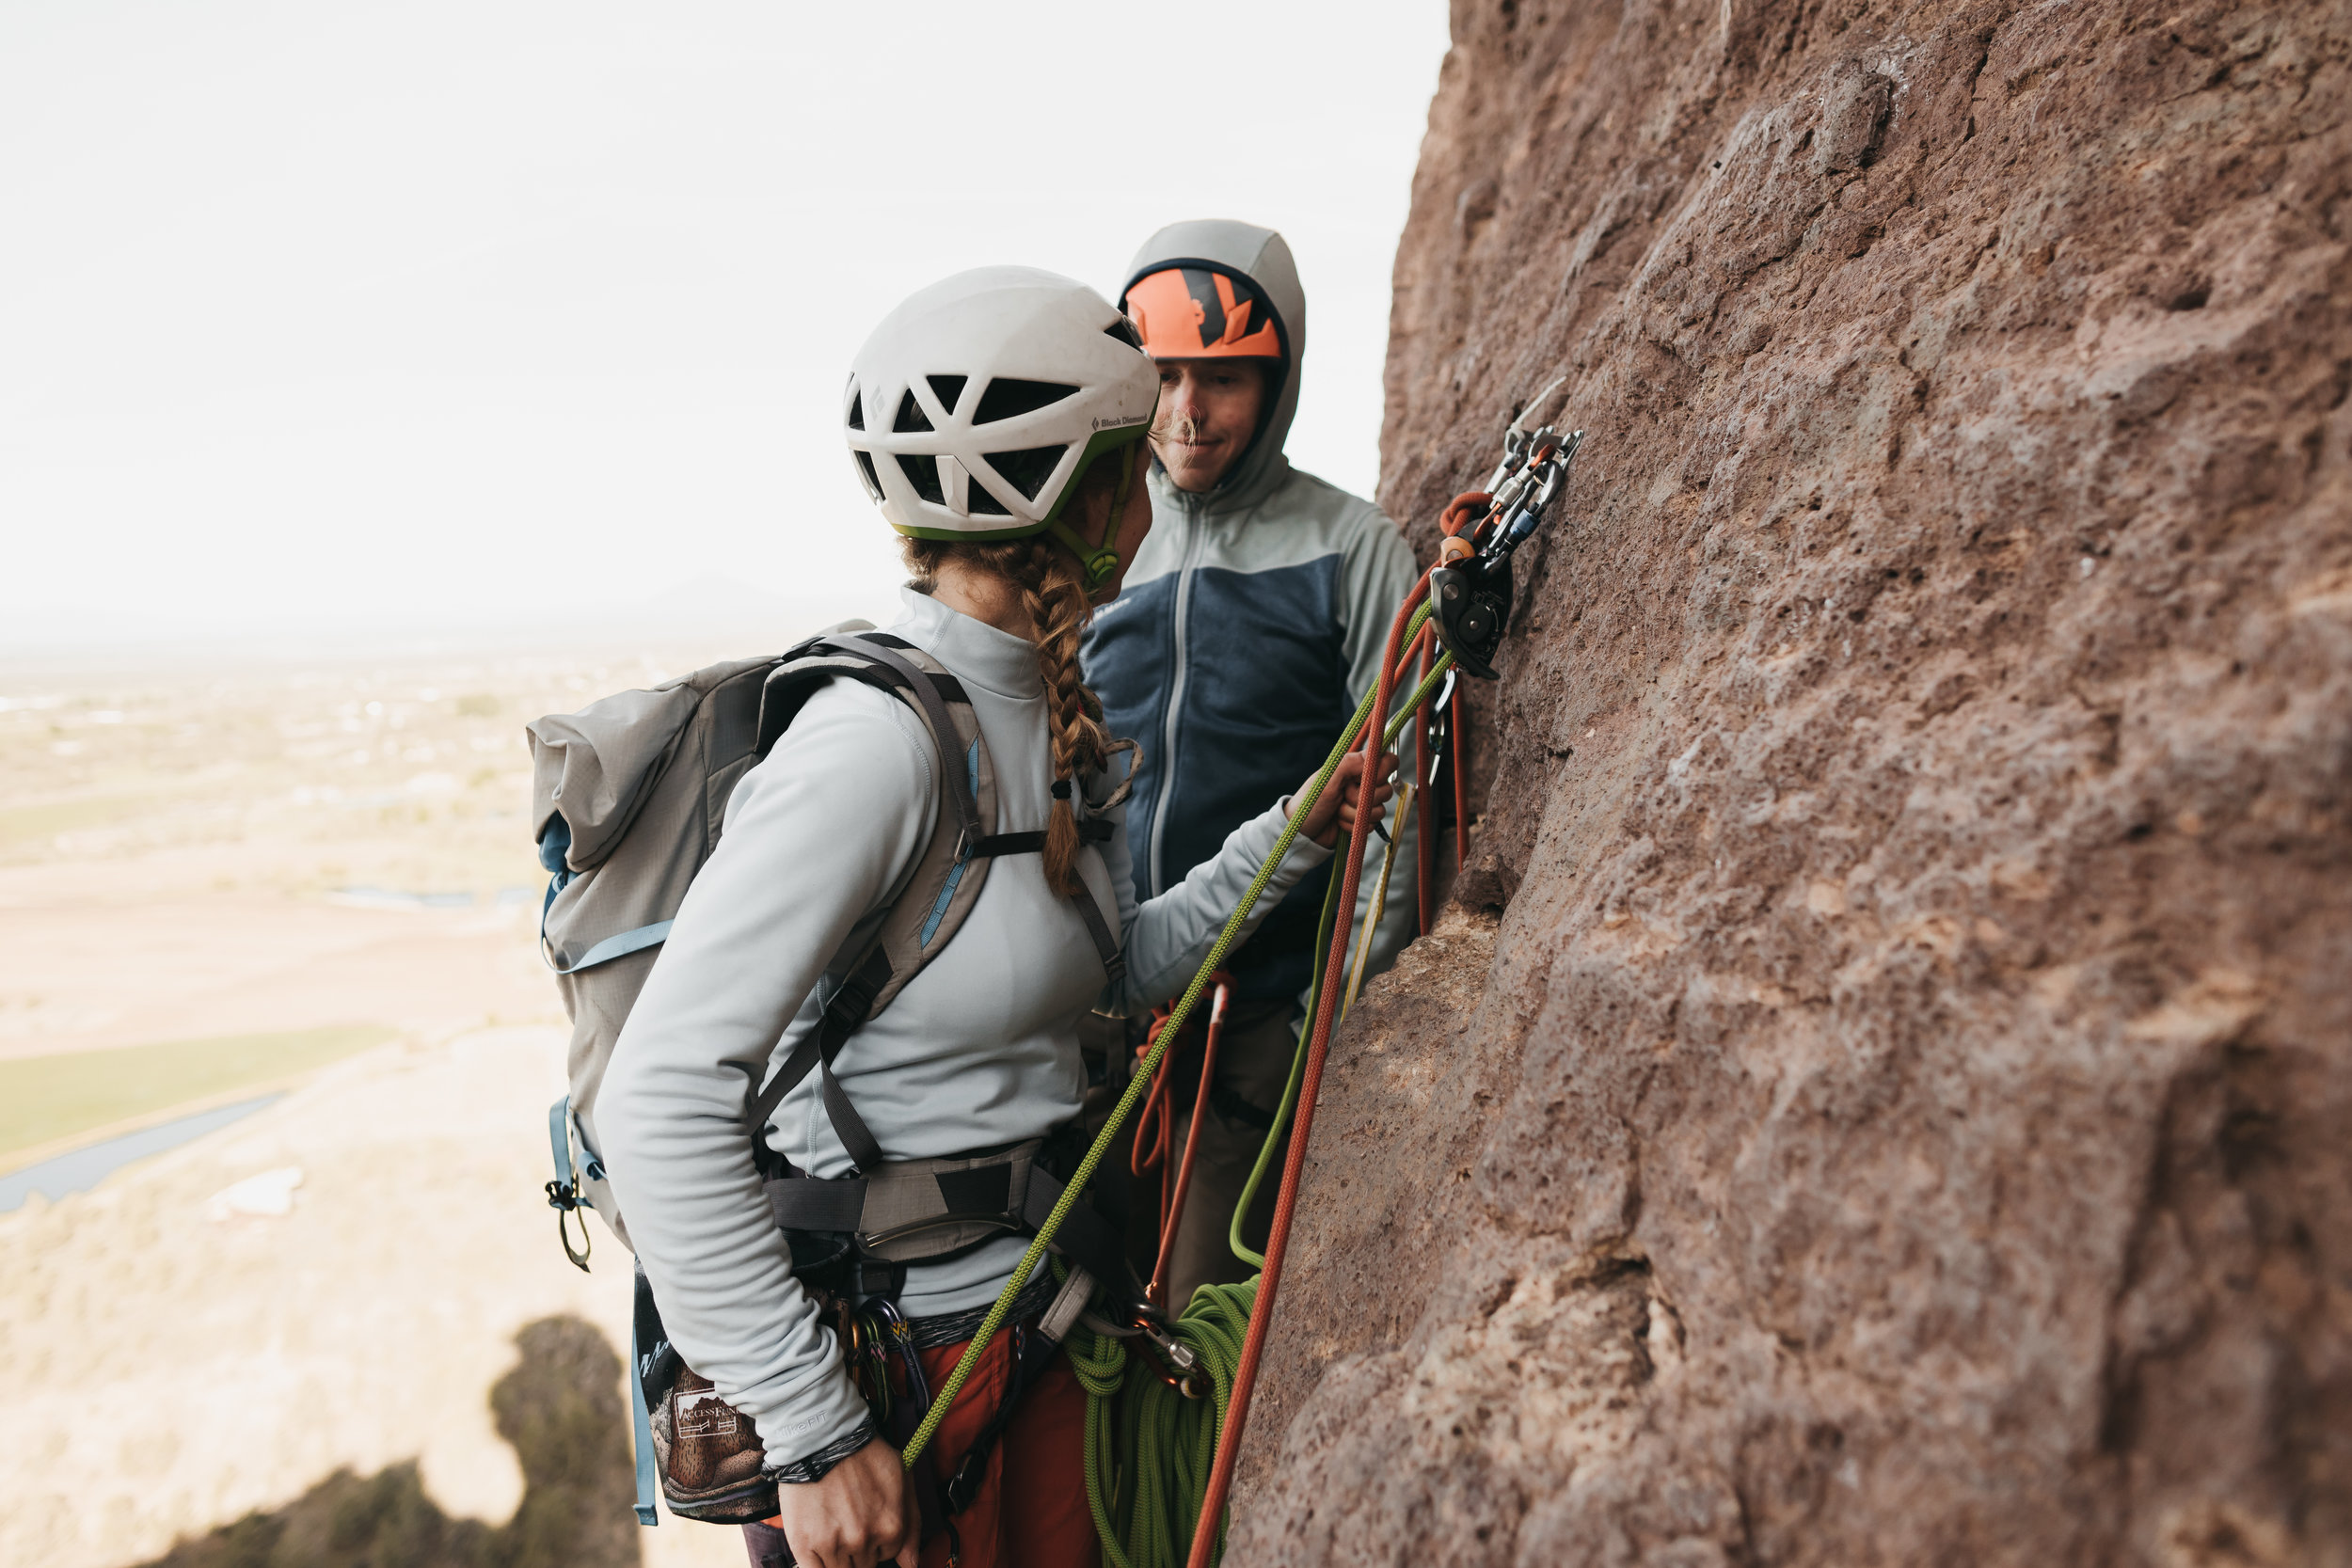 Smith Rock Rock Climbing Elopement | Between the Pine Adventure Elopement Photography 